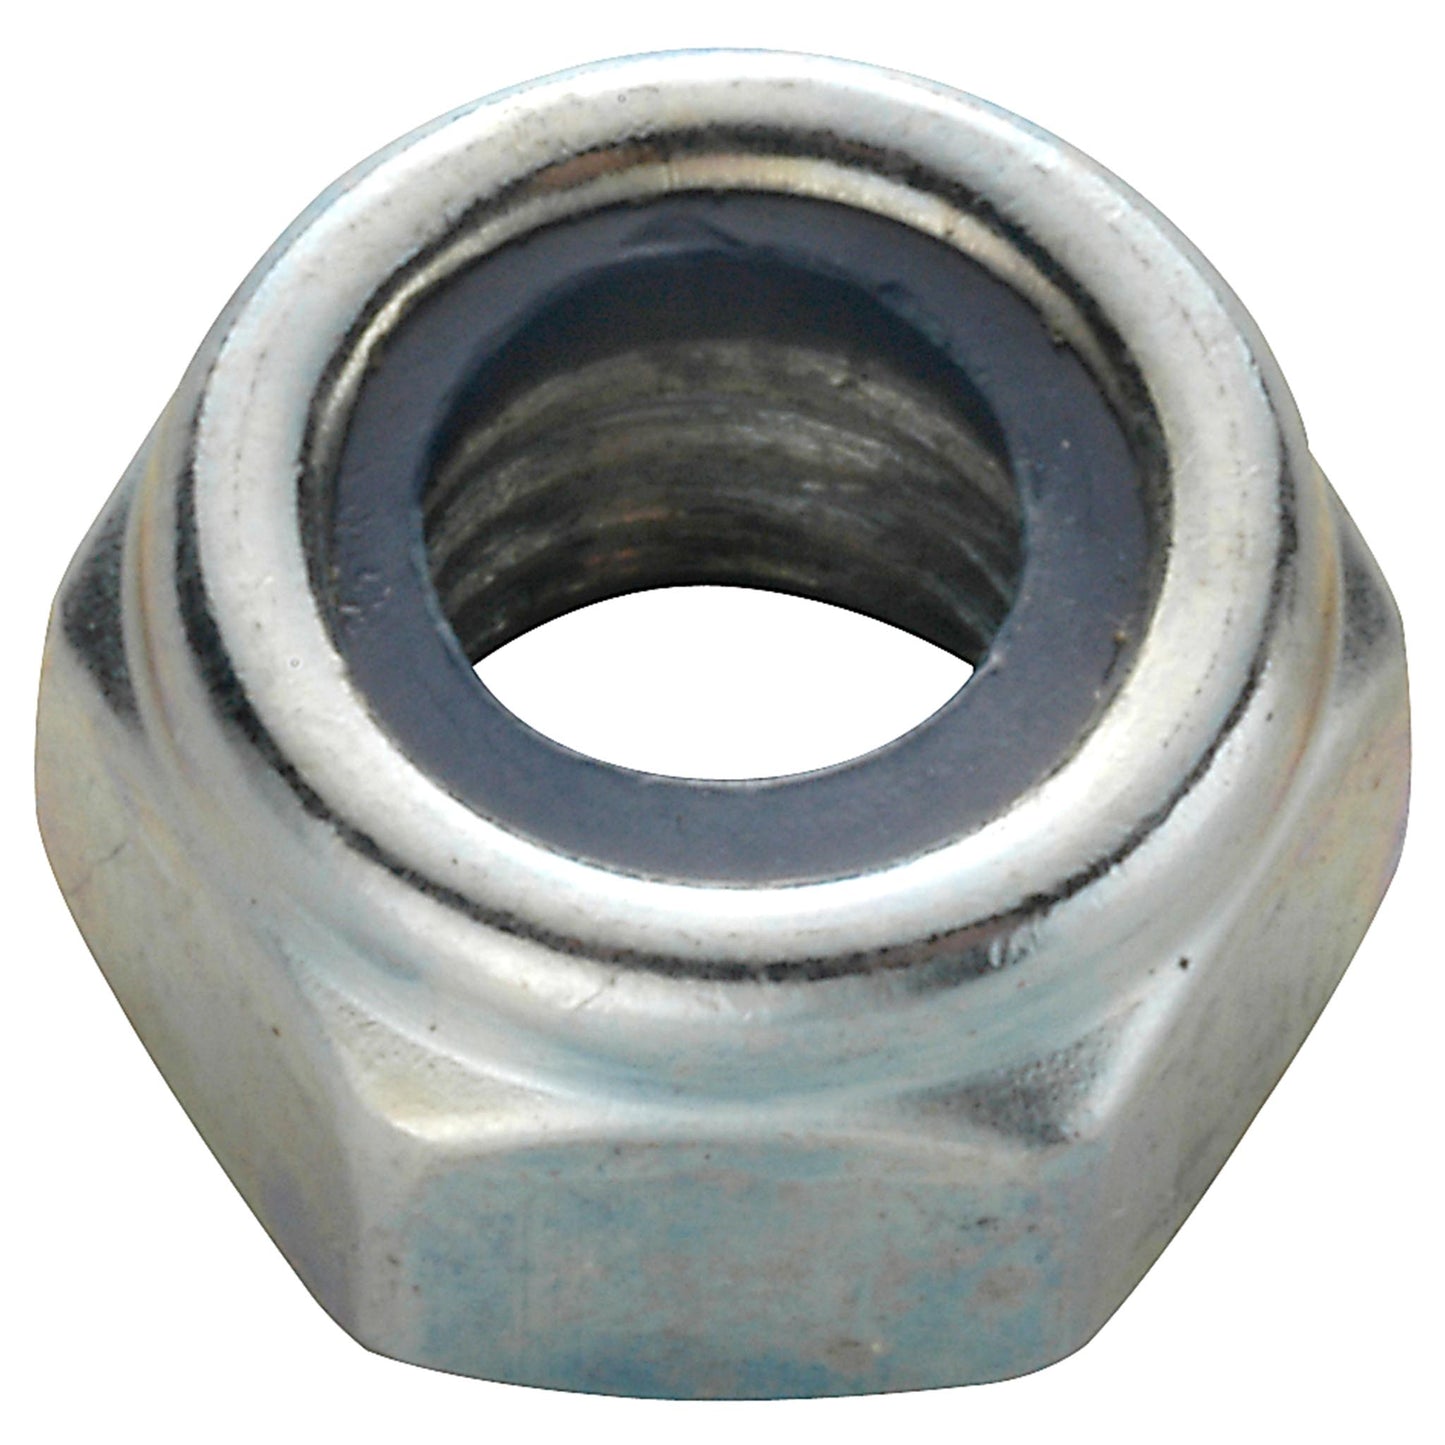 Lock nuts DIN 985 M 5 galvanized steel